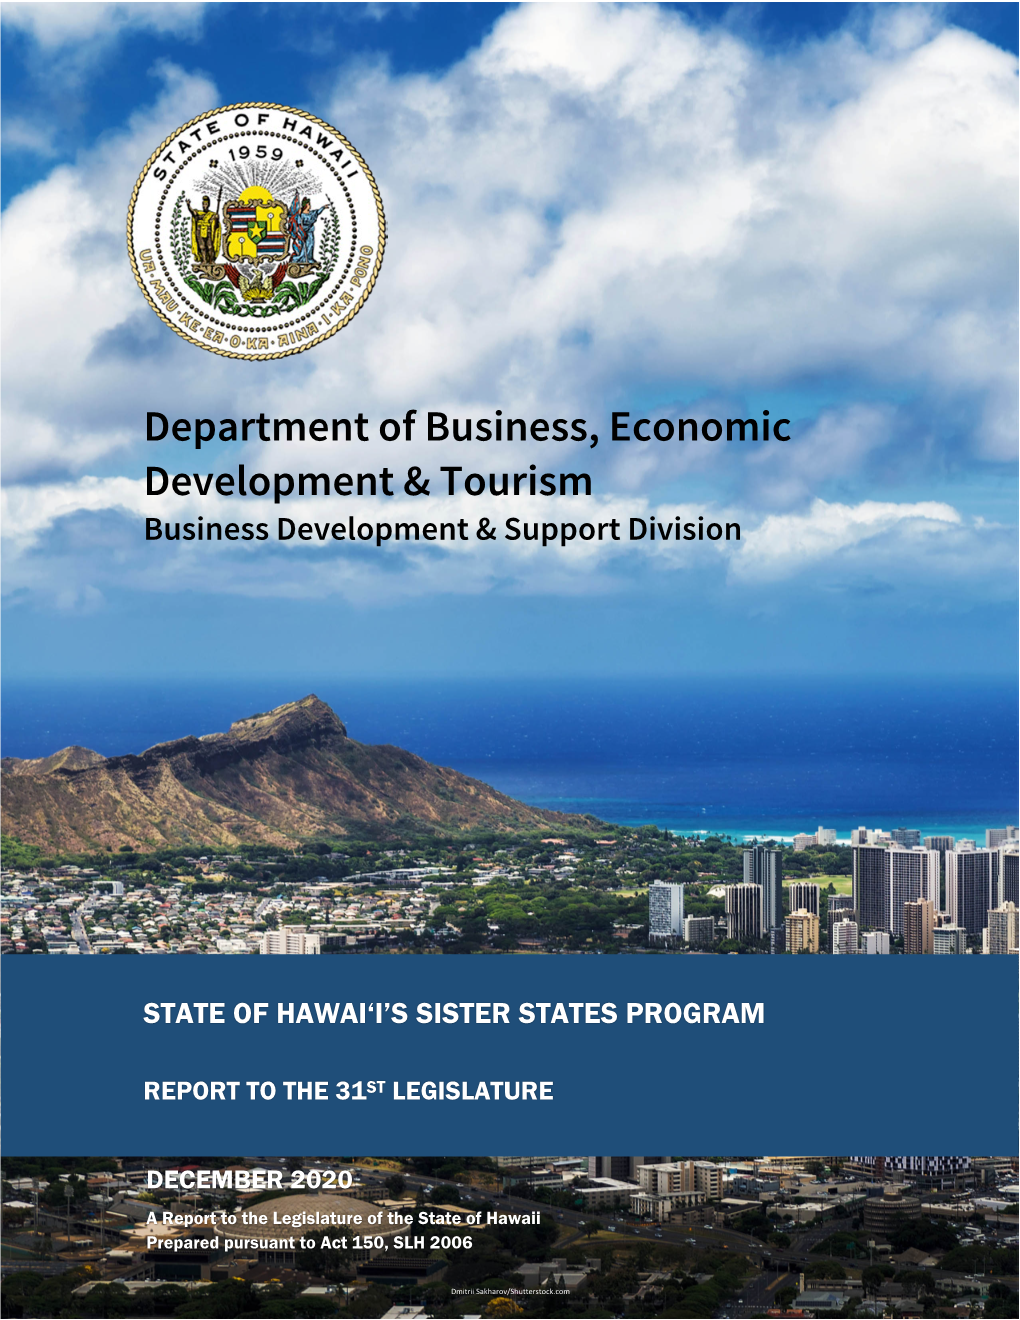 Department of Business, Economic Development & Tourism